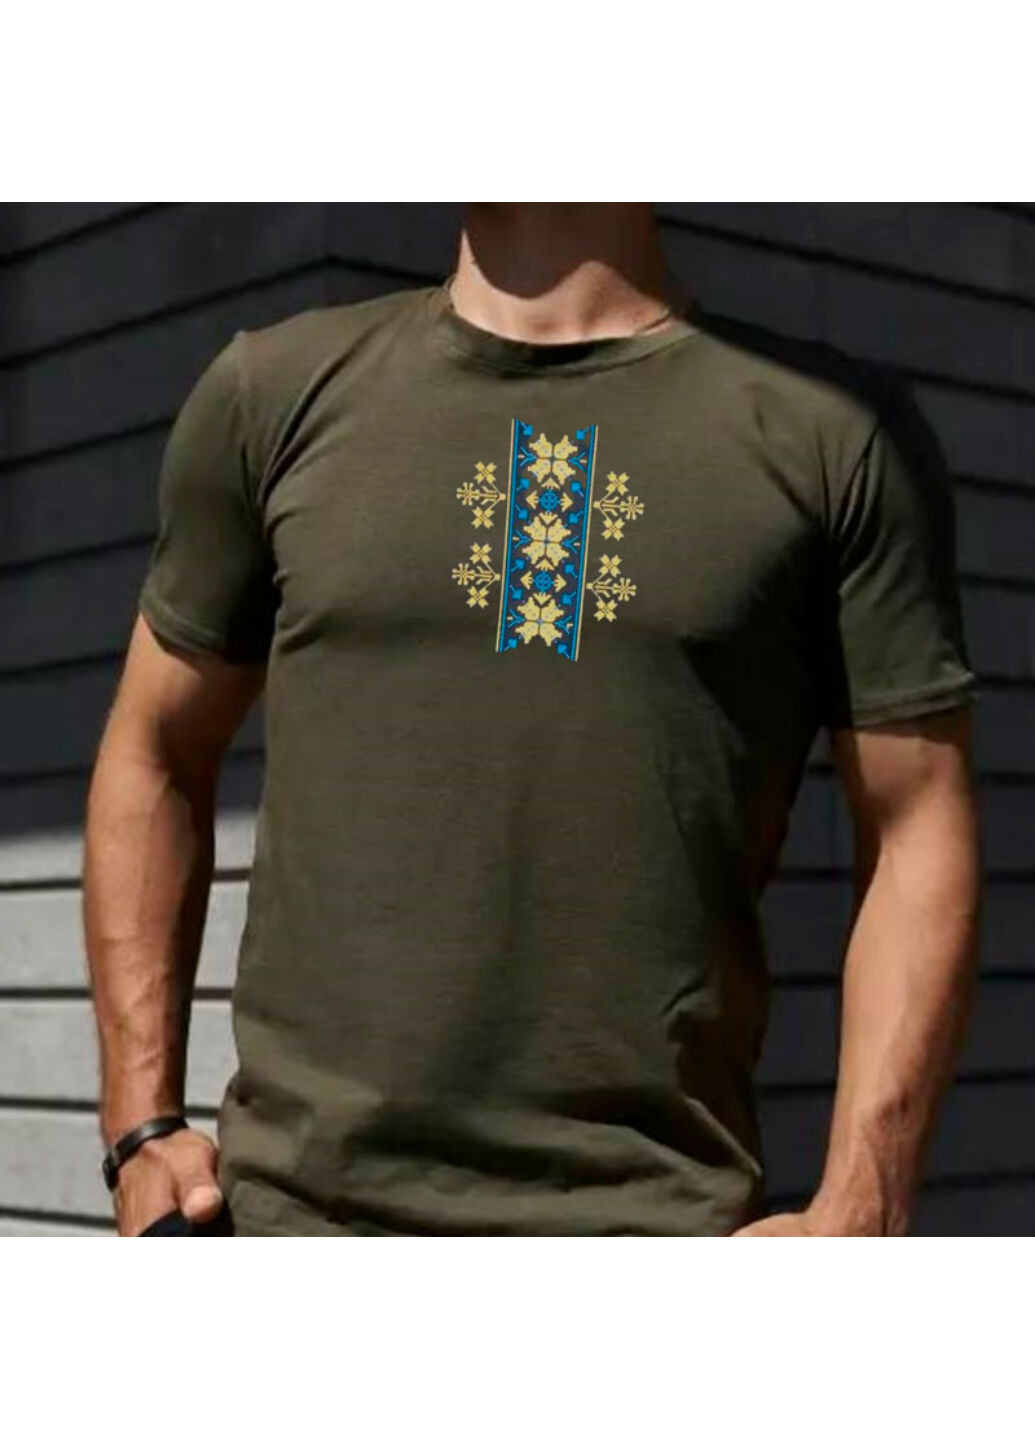 Хаки (оливковая) футболка з вишивкою етно 01-3 мужская хаки xl No Brand